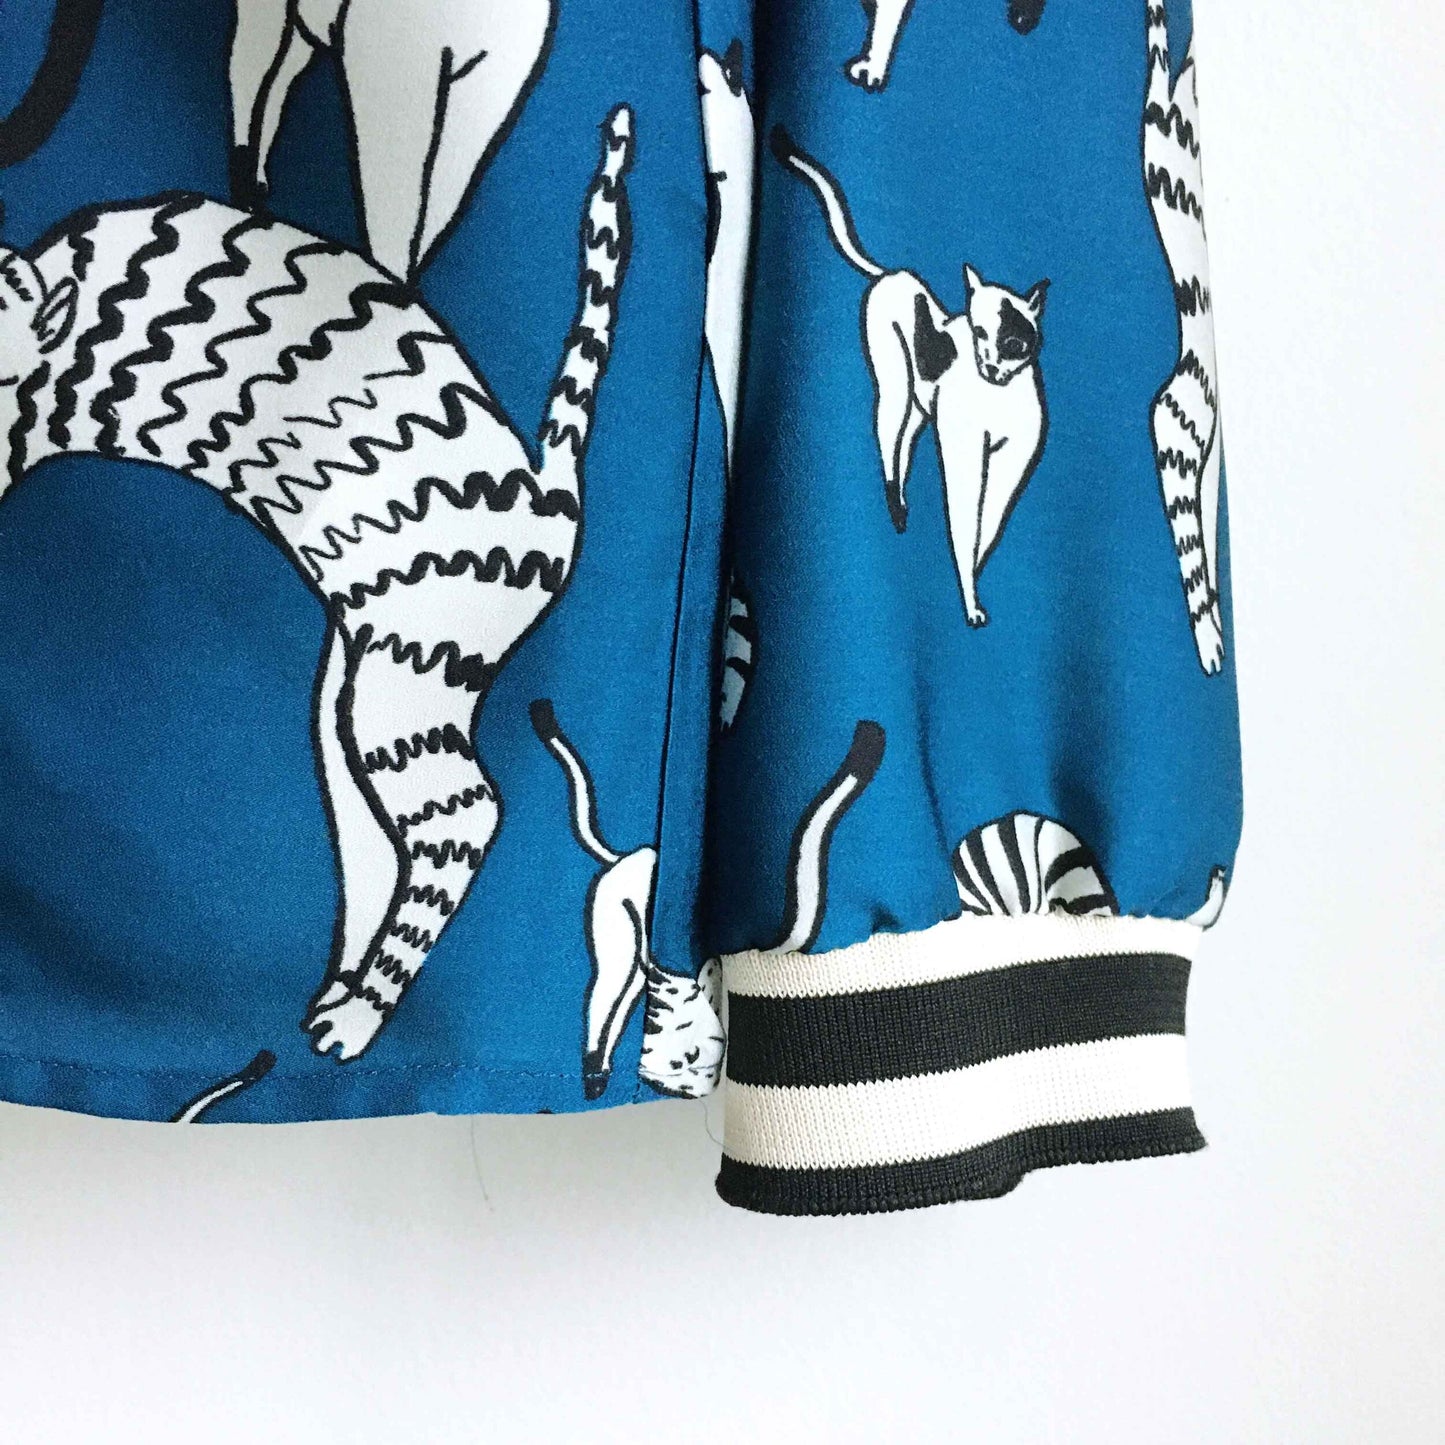 Zara printed cat blouse with knit trim - size Medium